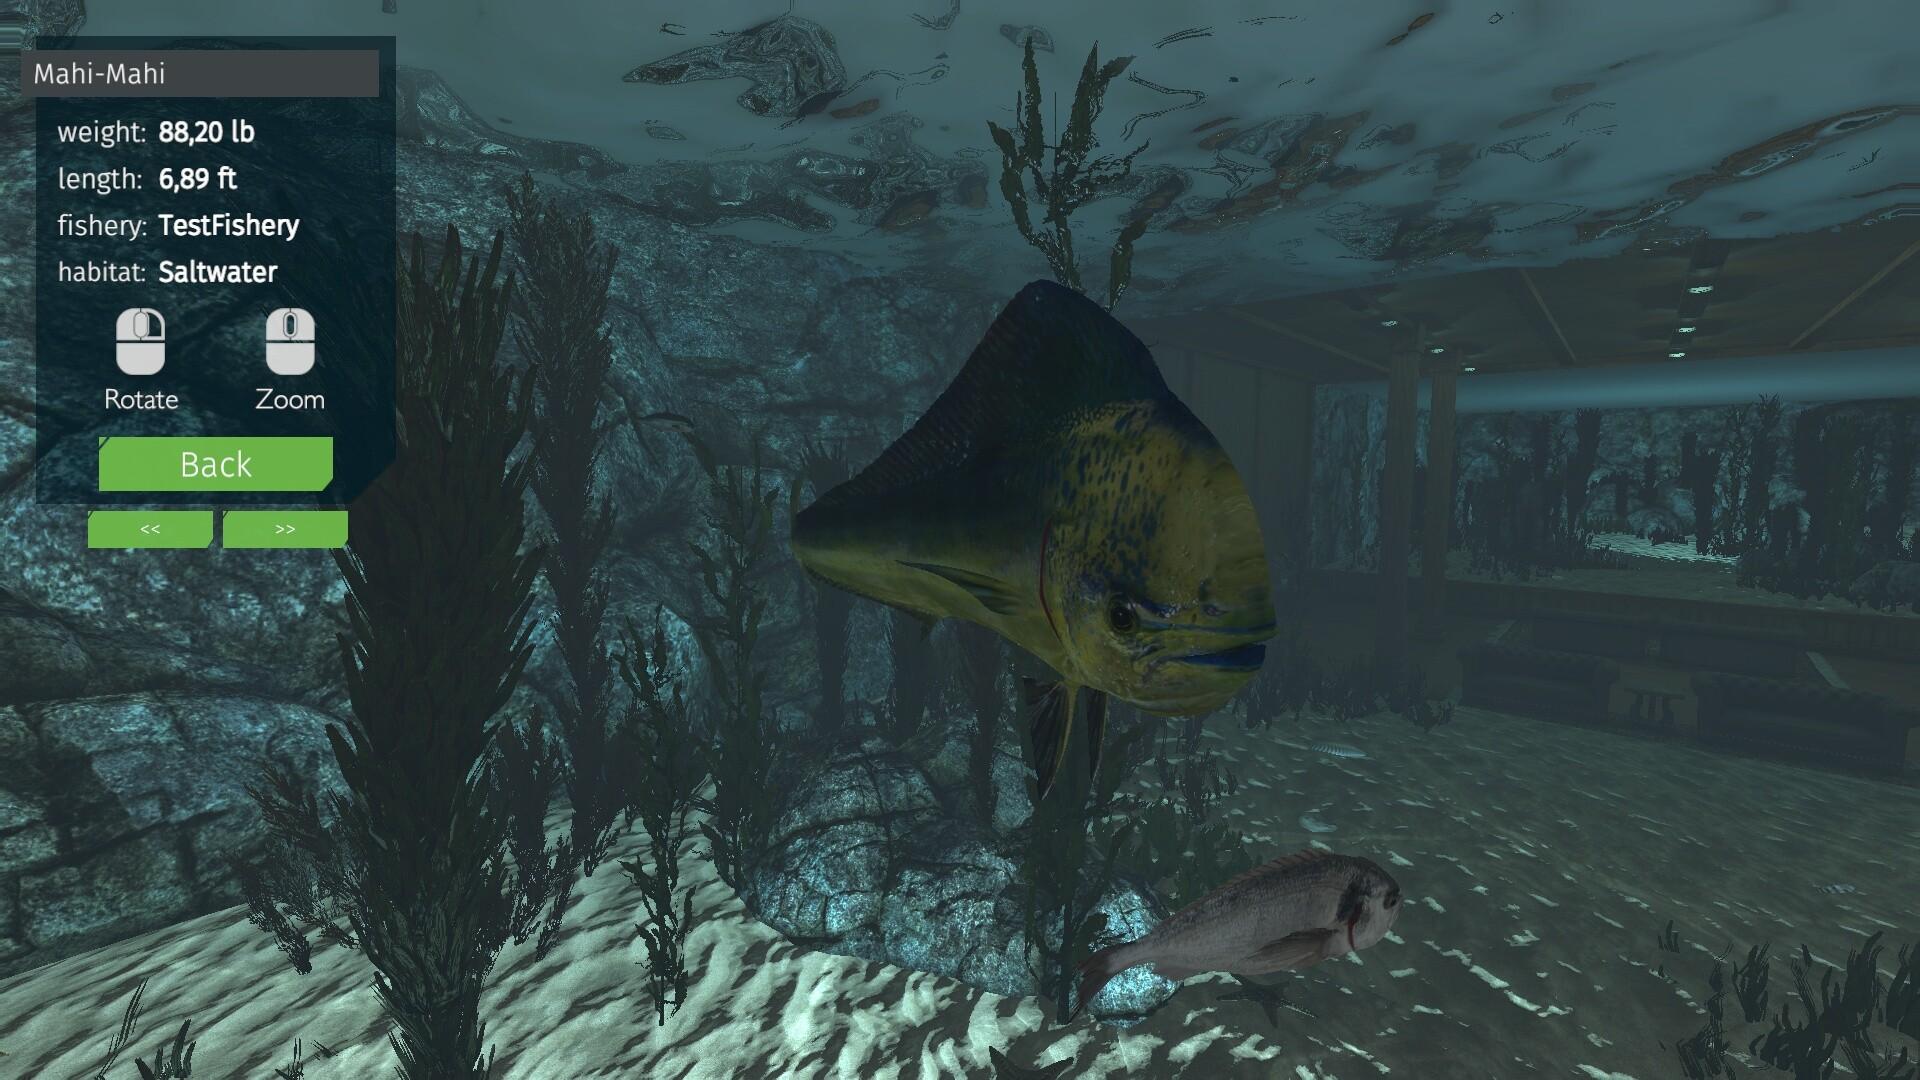 Ultimate Fishing Simulator - Aquariums DLC